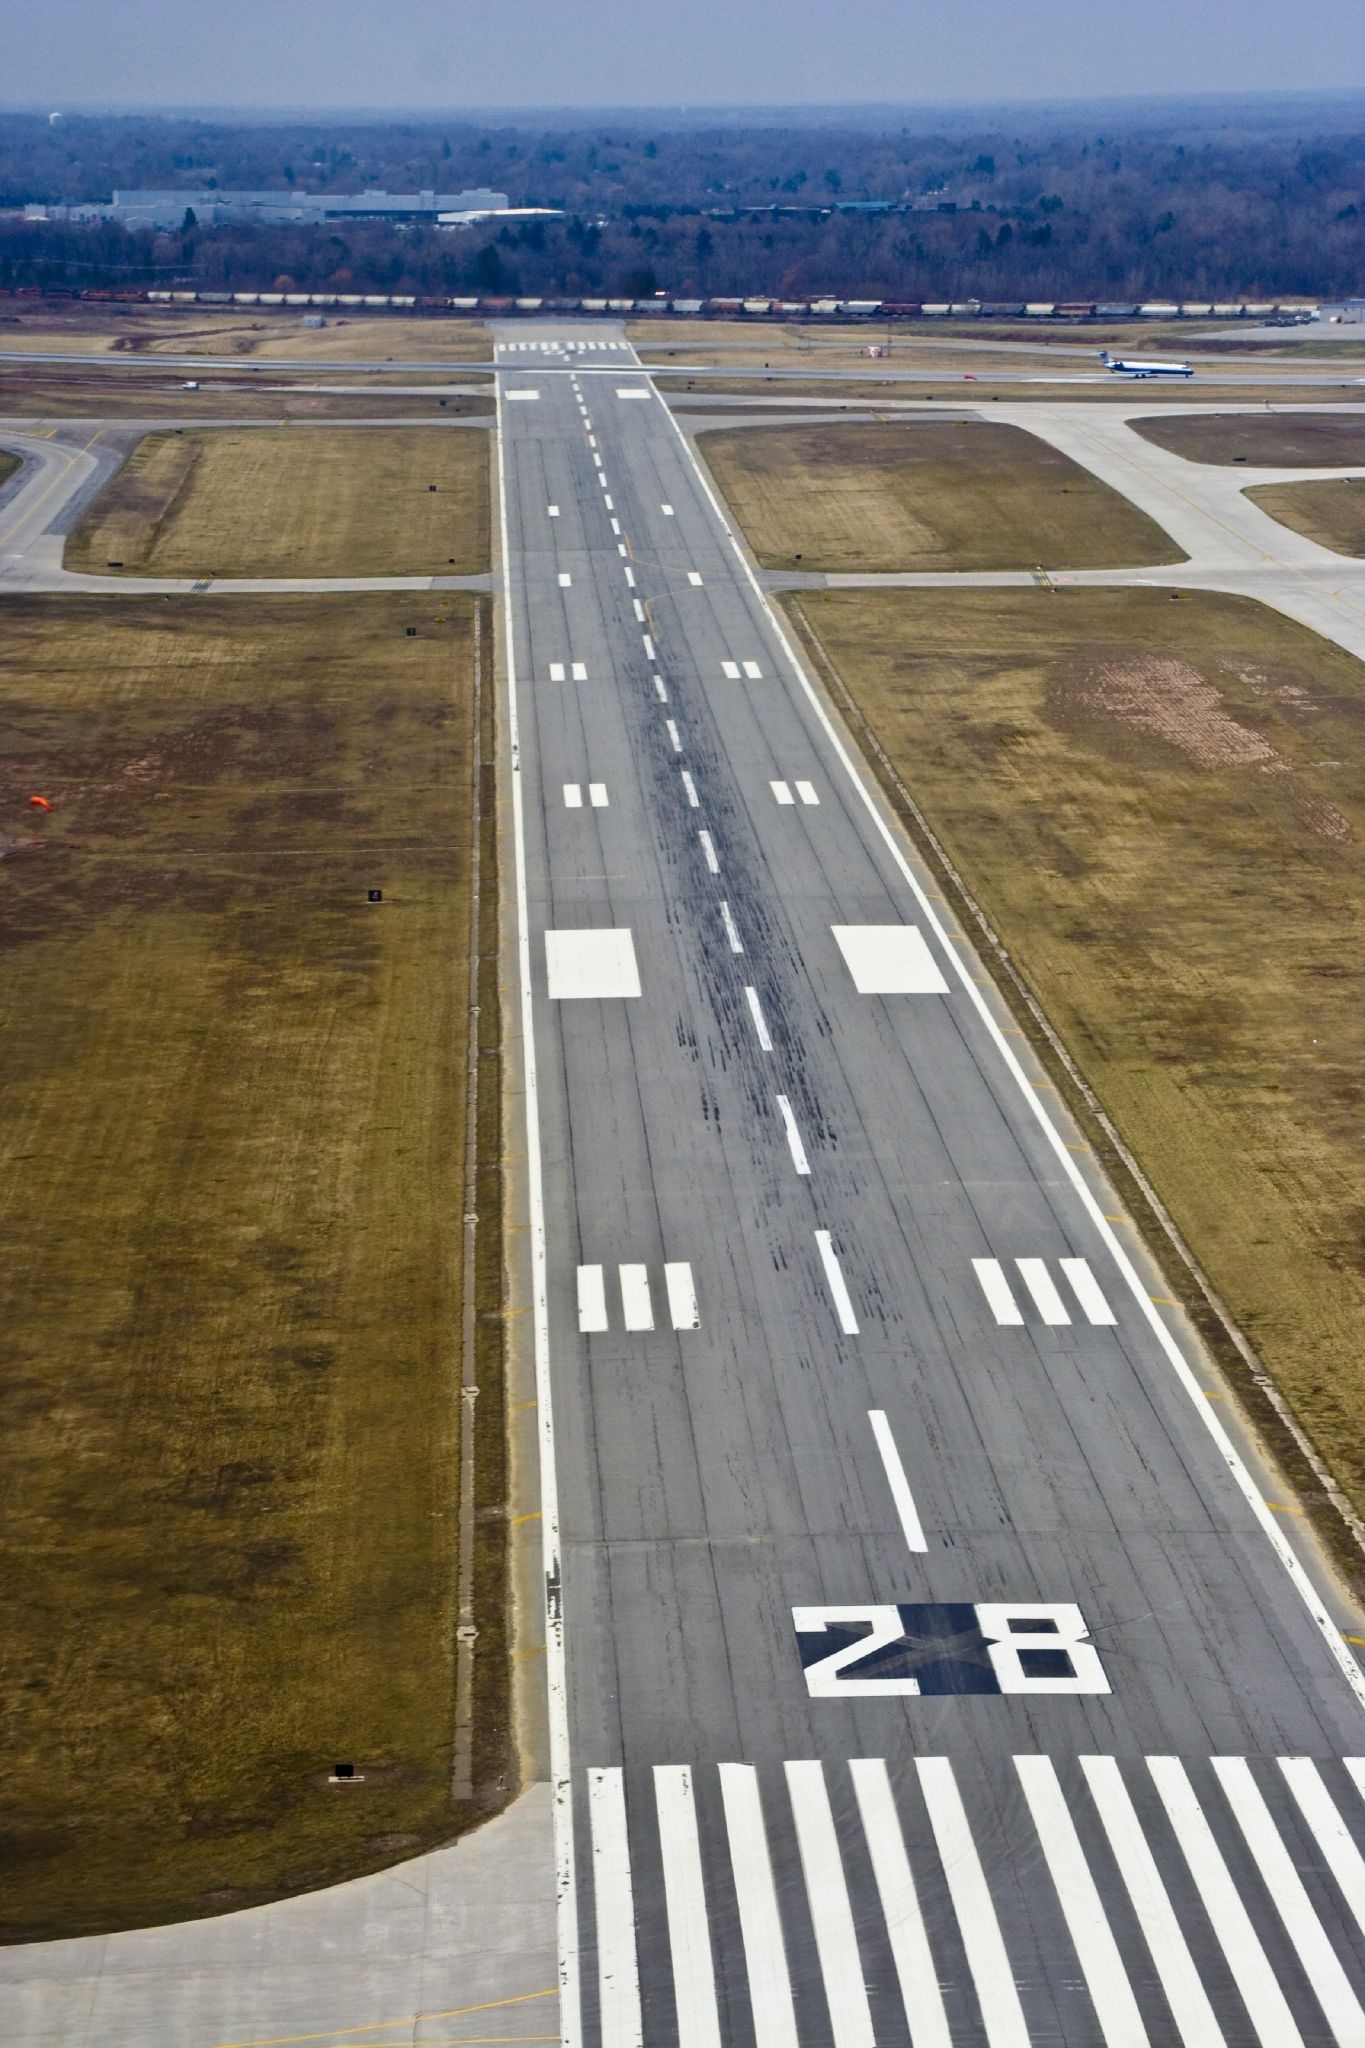 fsx change runway numbers